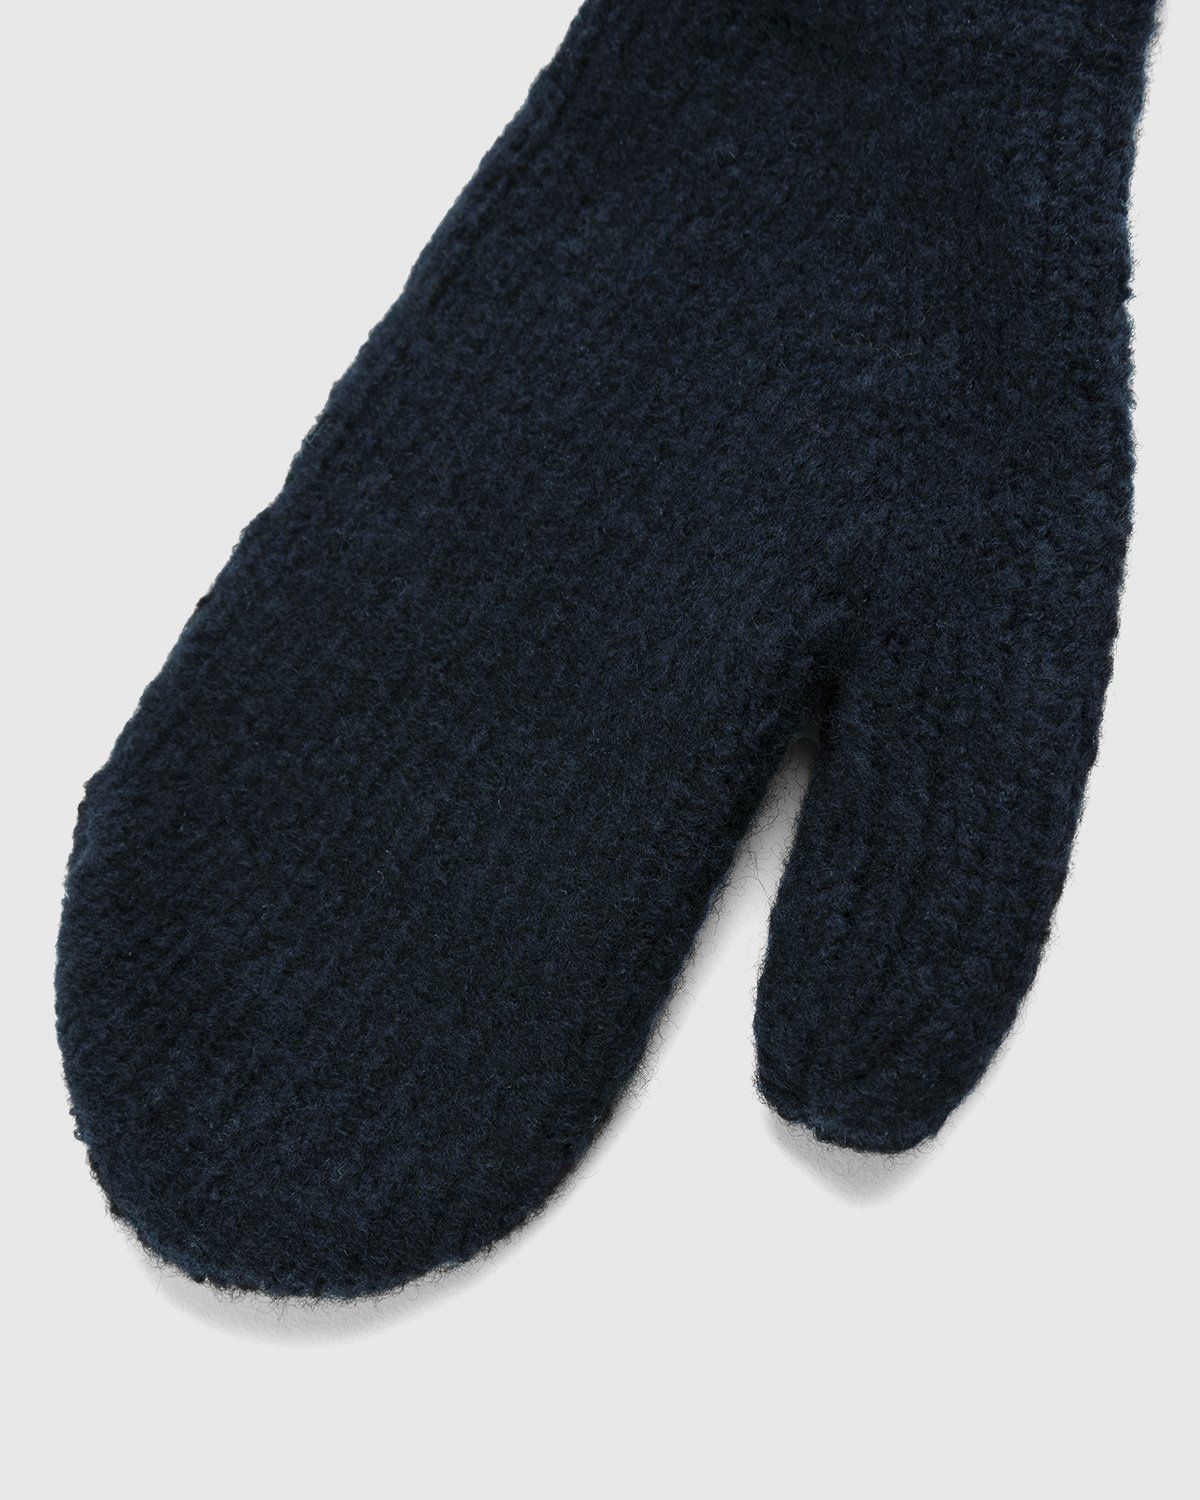 Acne Studios – Wool Blend Mittens Black - Gloves - Black - Image 2